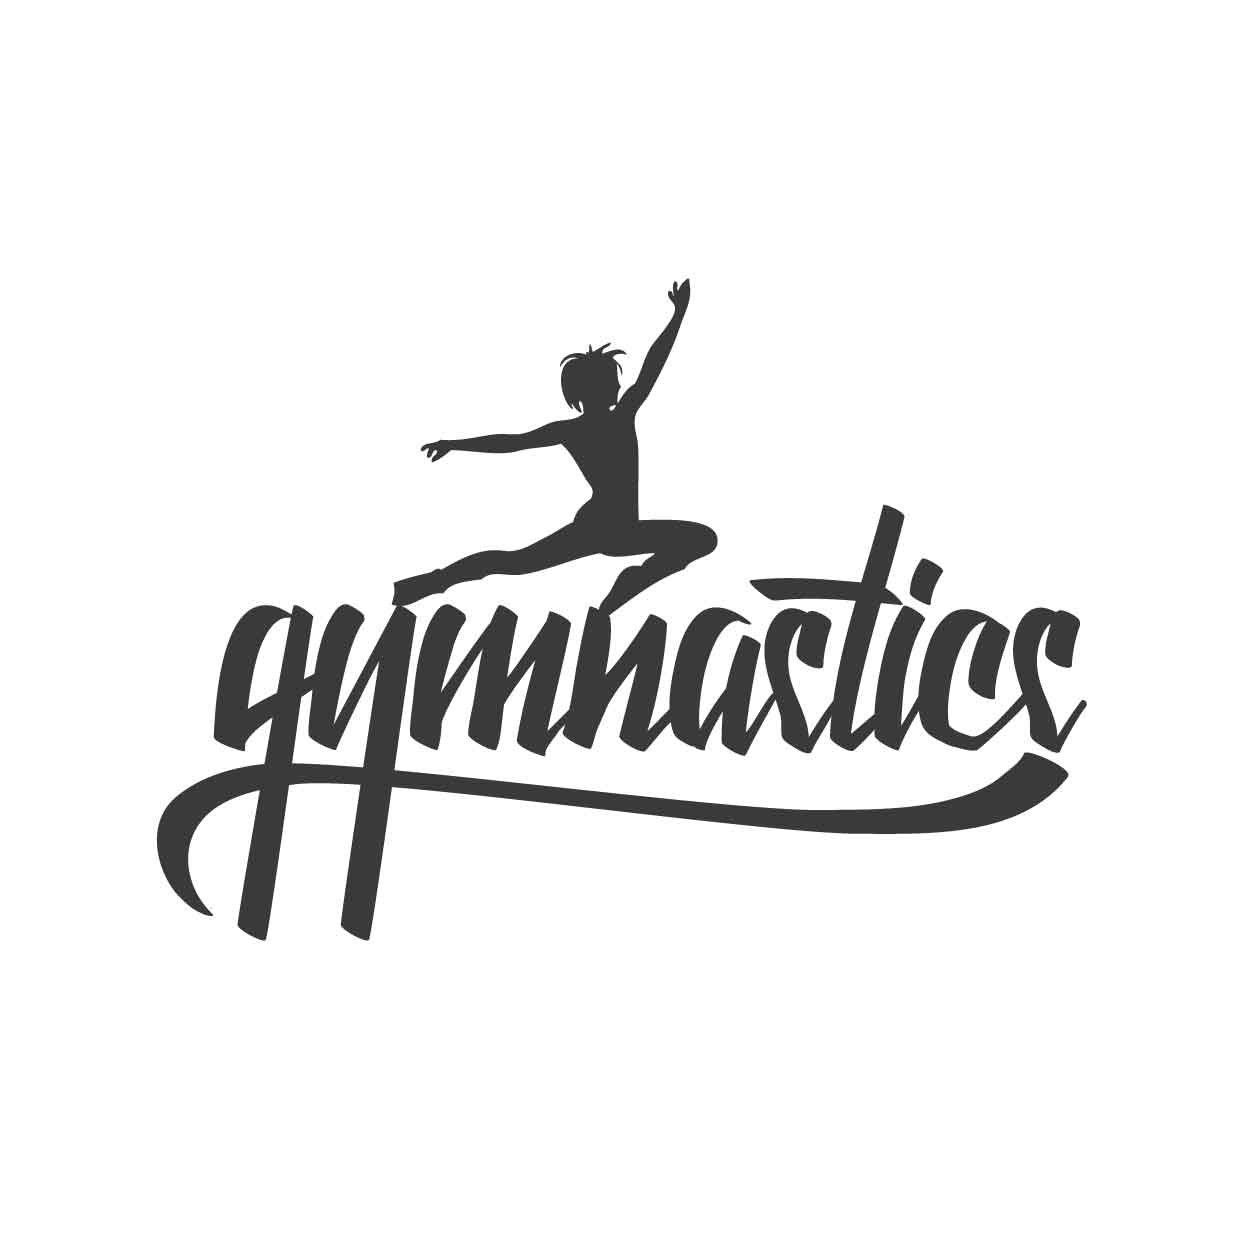 Gymnastics Quotes Wallpaper. QuotesGram